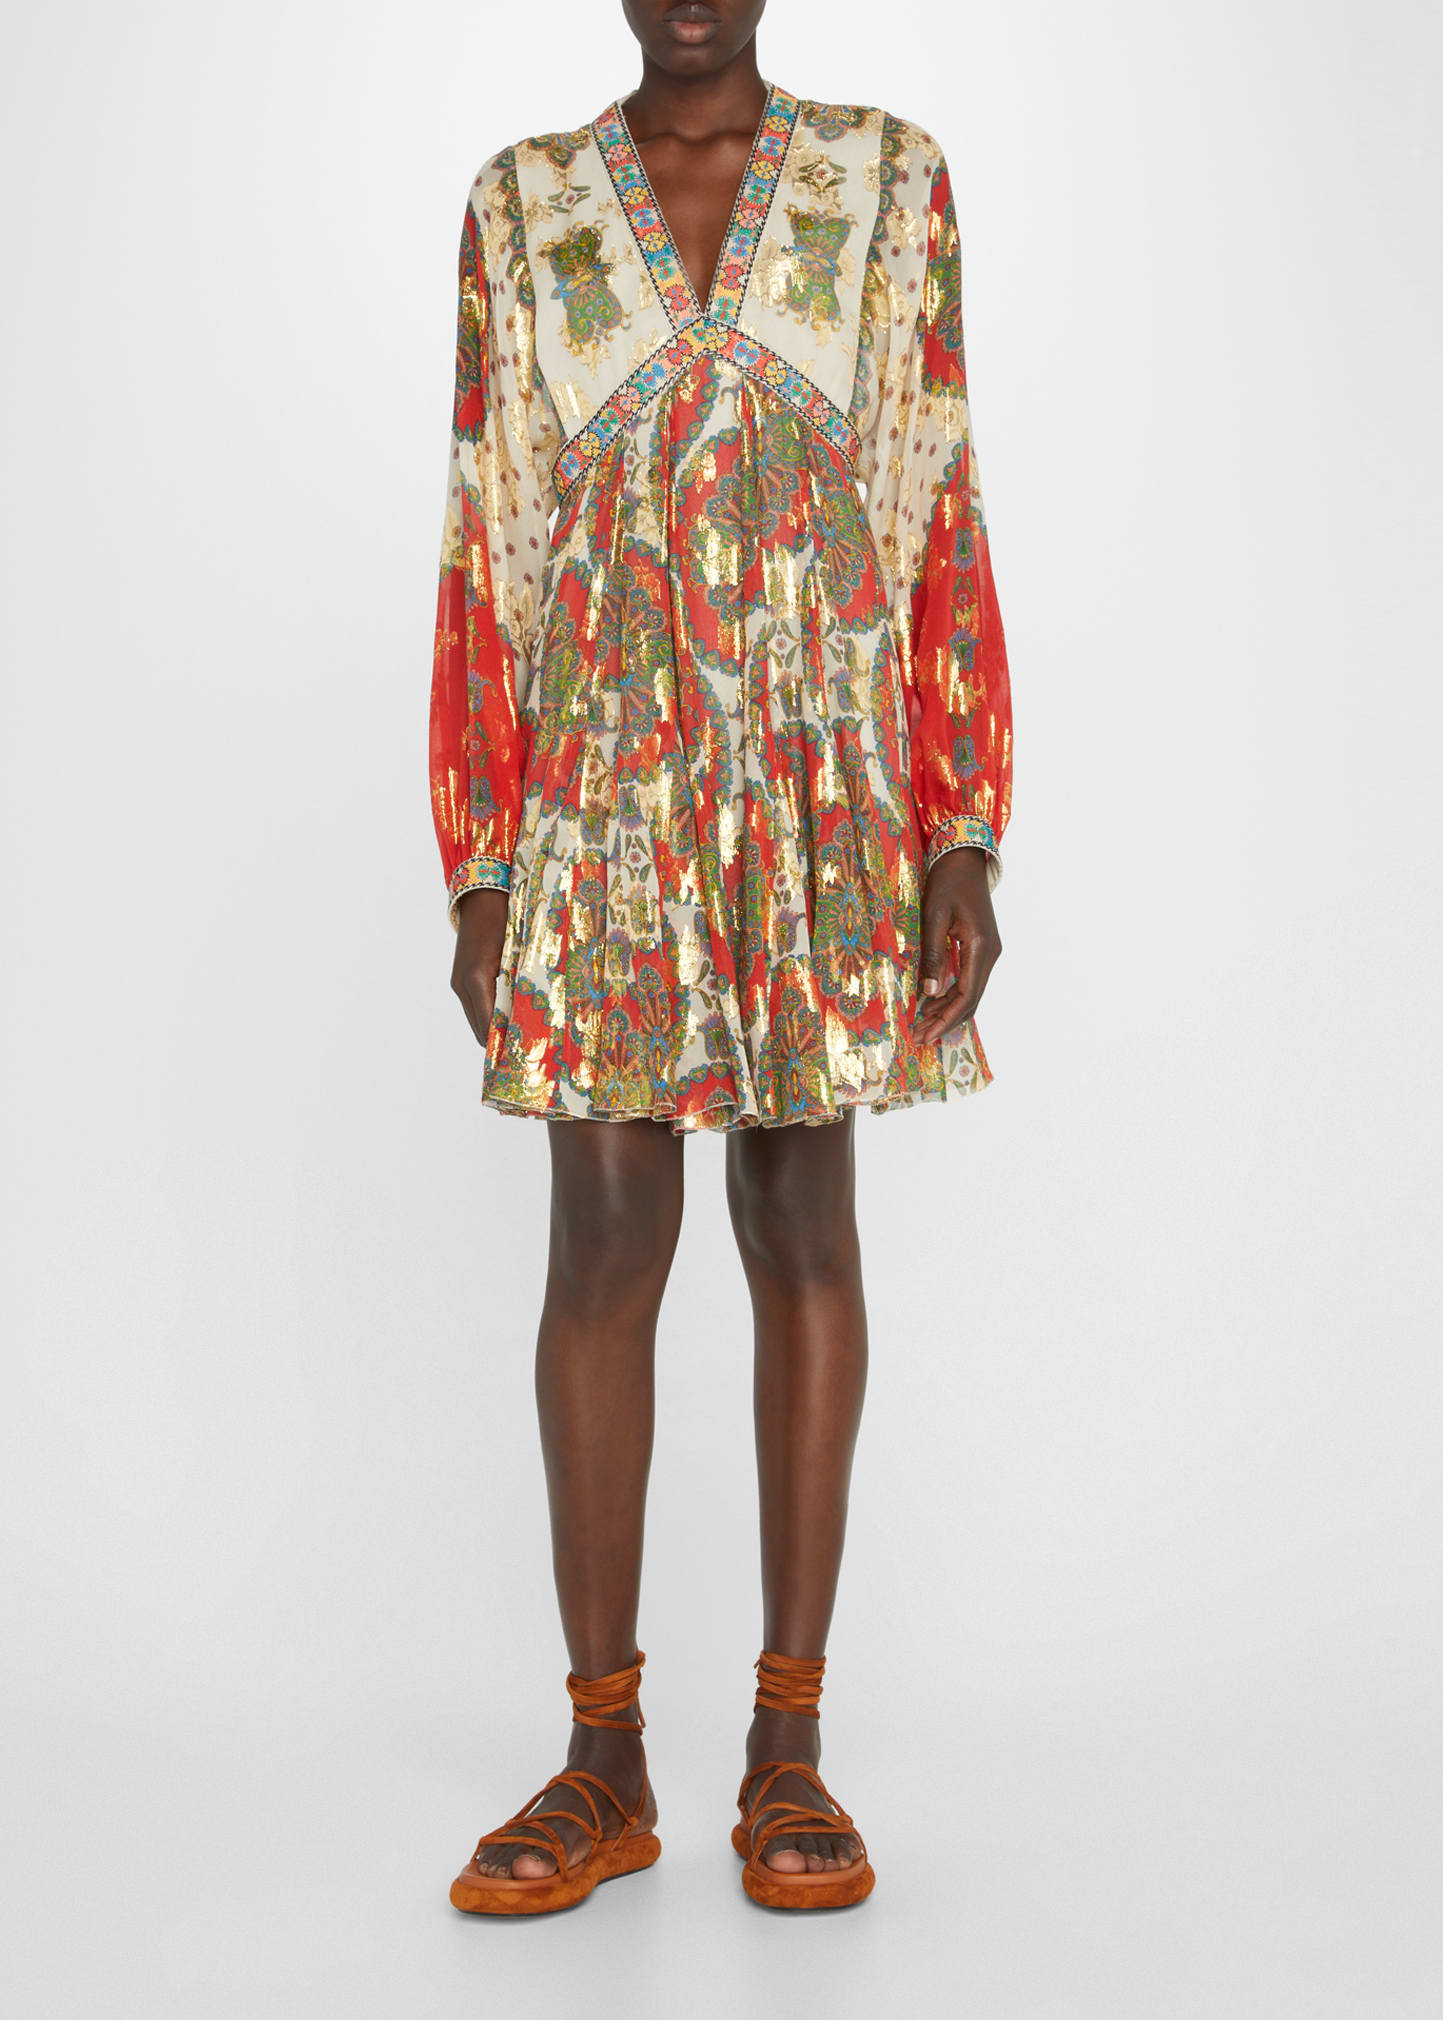 Irima Paisley-Print Metallic Floral Jacquard Dress